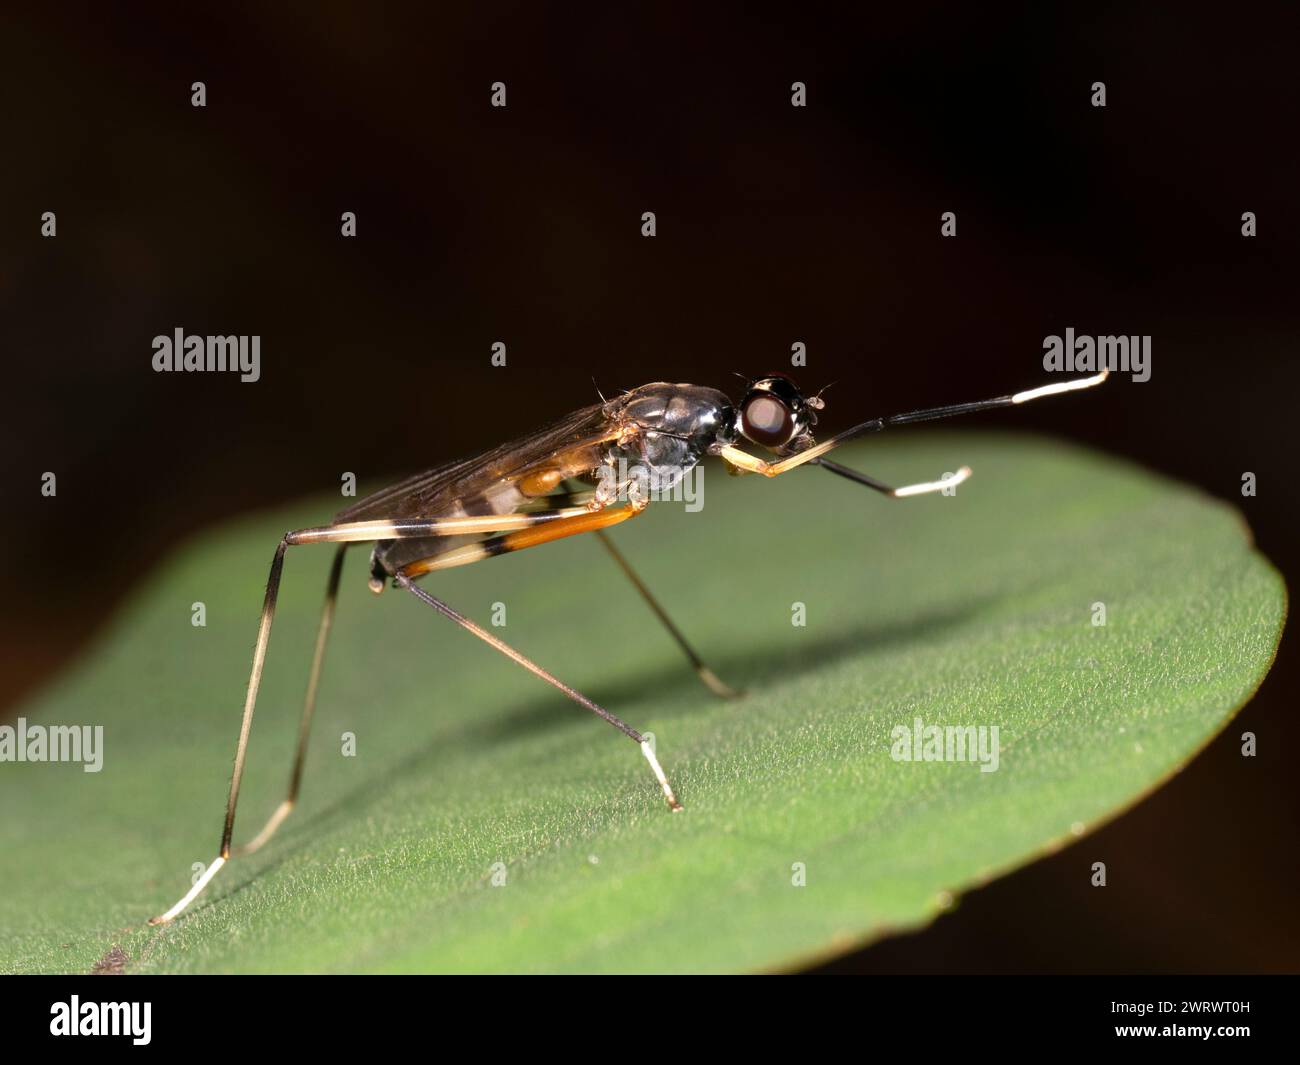 Volo a gambe lunghe (Dolichopodidae sp.) Riserva naturale di Khao Sok, Thailandia Foto Stock